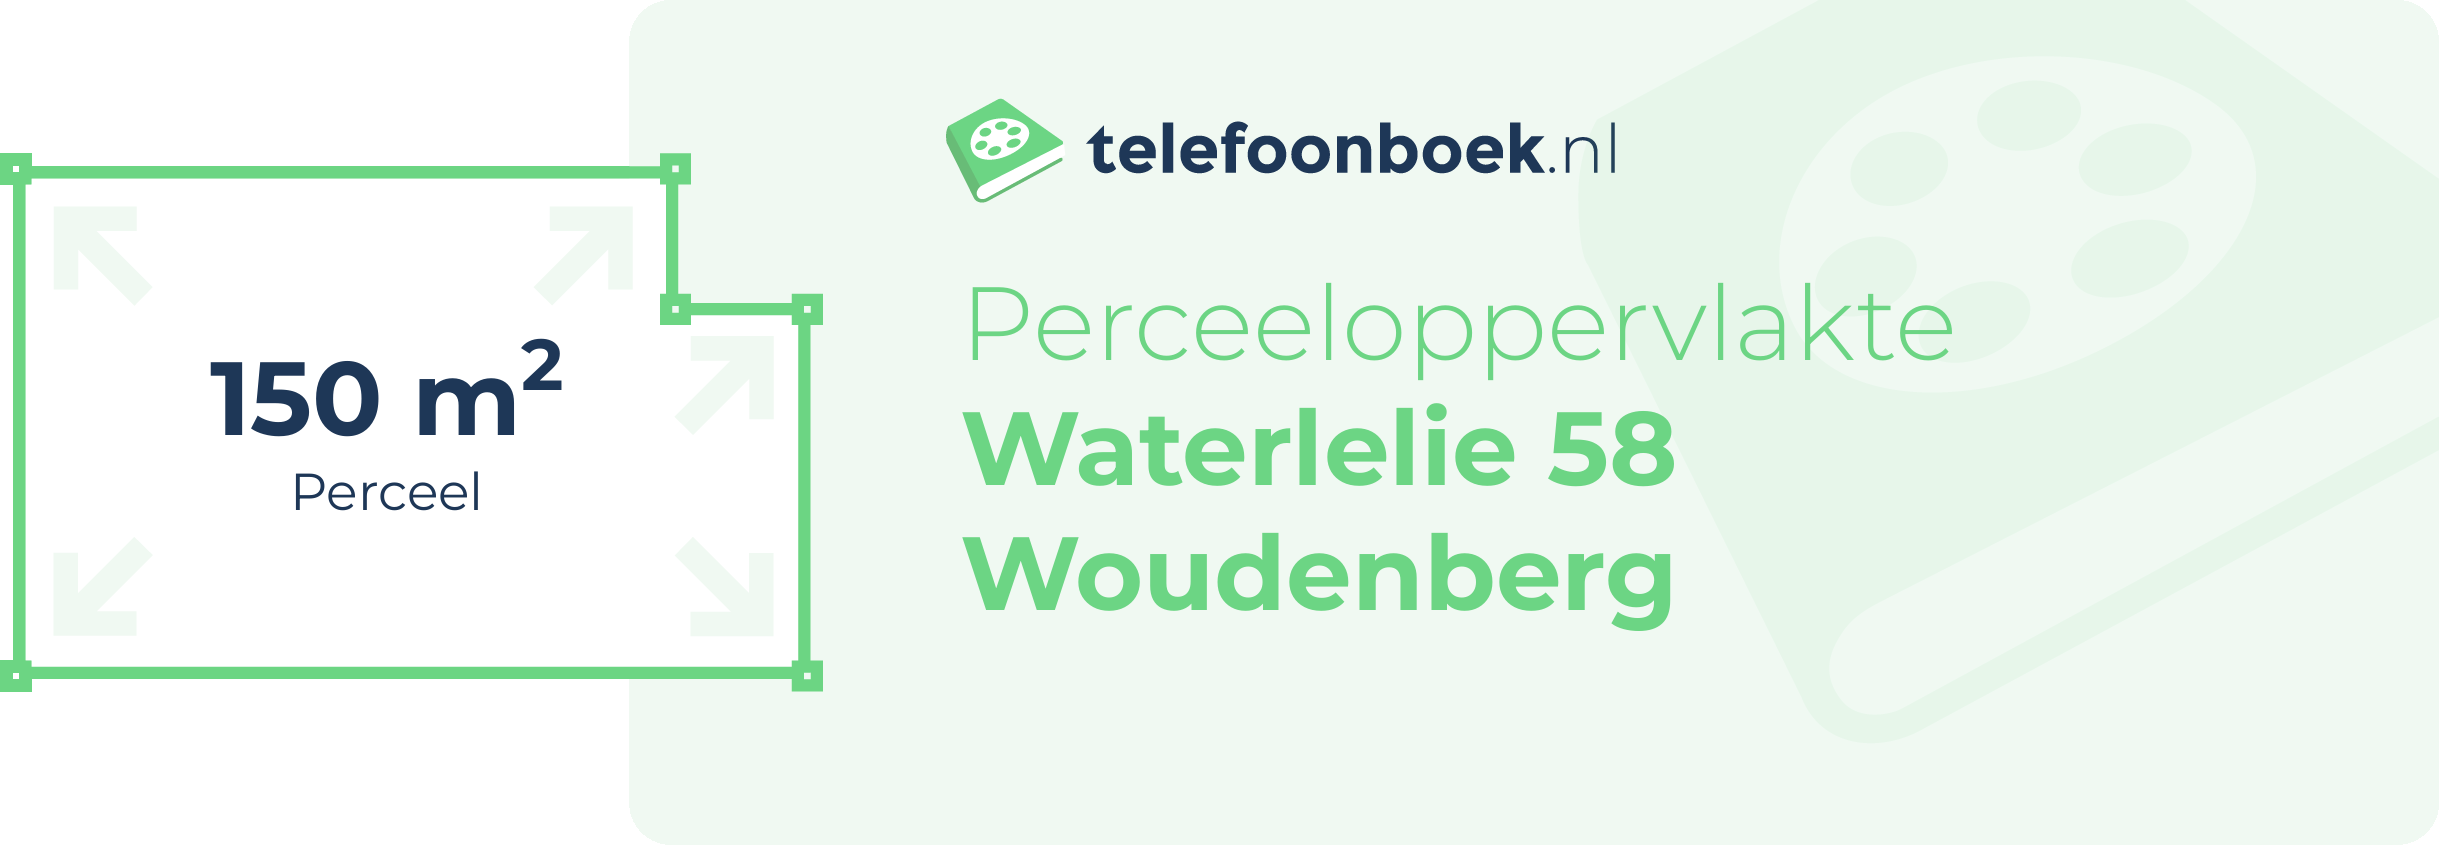 Perceeloppervlakte Waterlelie 58 Woudenberg